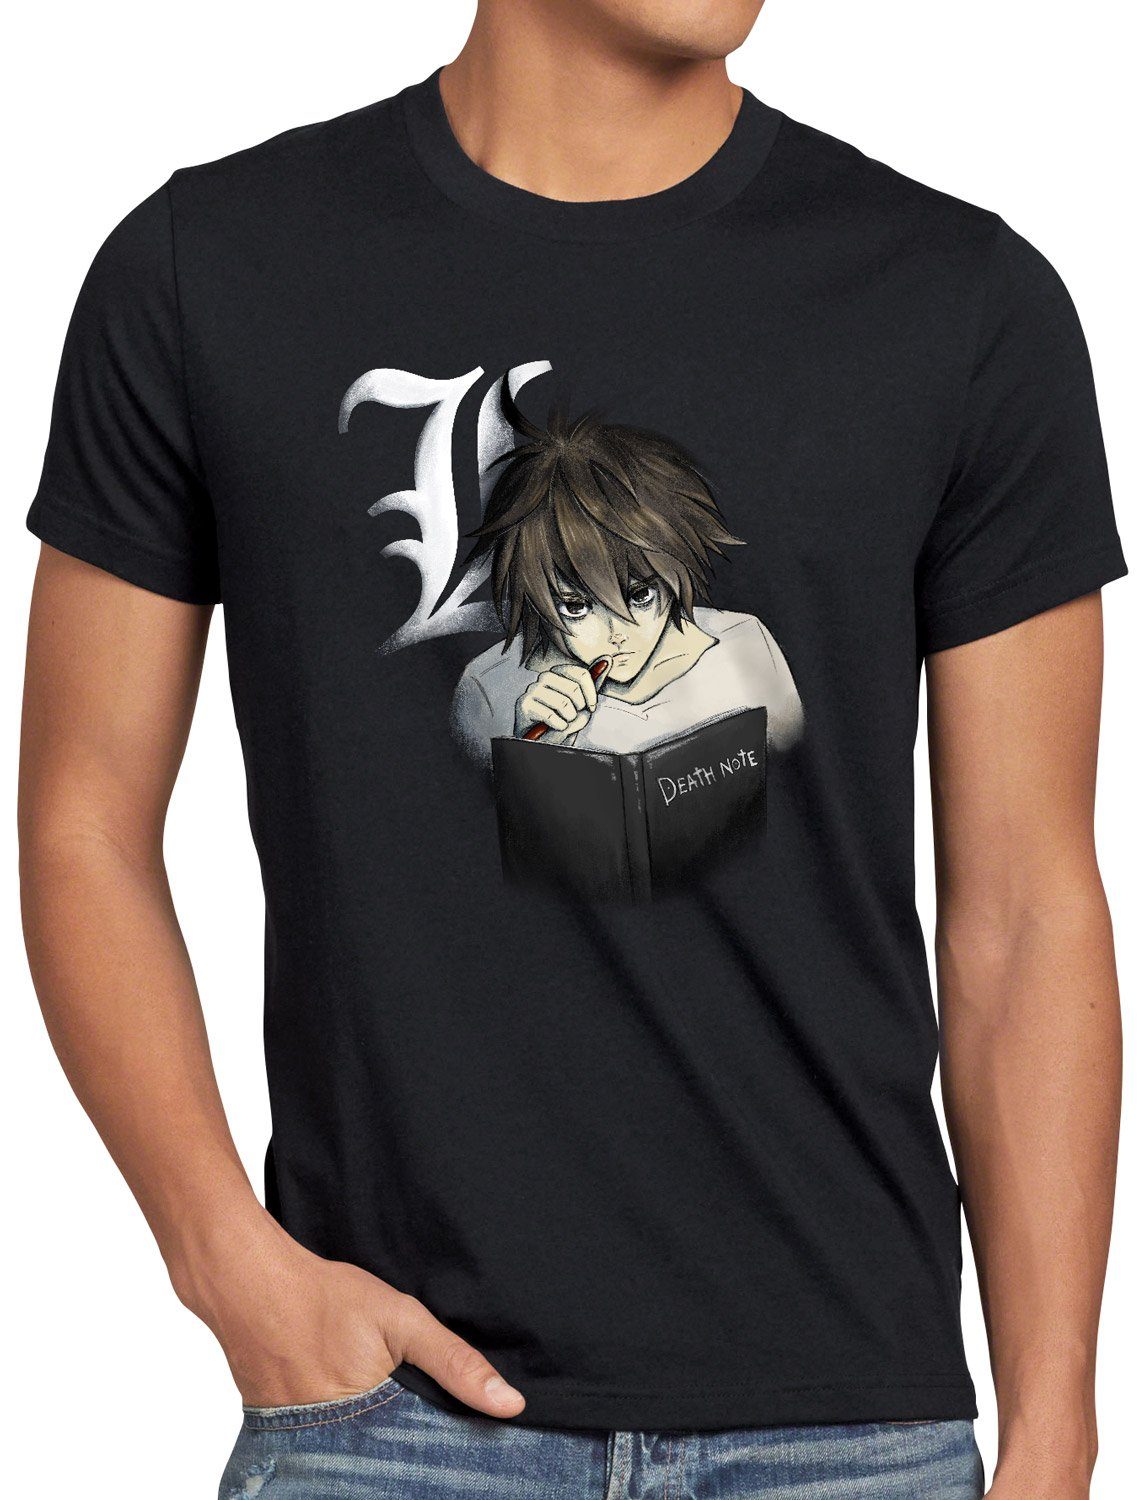 next? Death Note Who Notizbuch Manga Herren Print-Shirt T-Shirt style3 is Anime Death